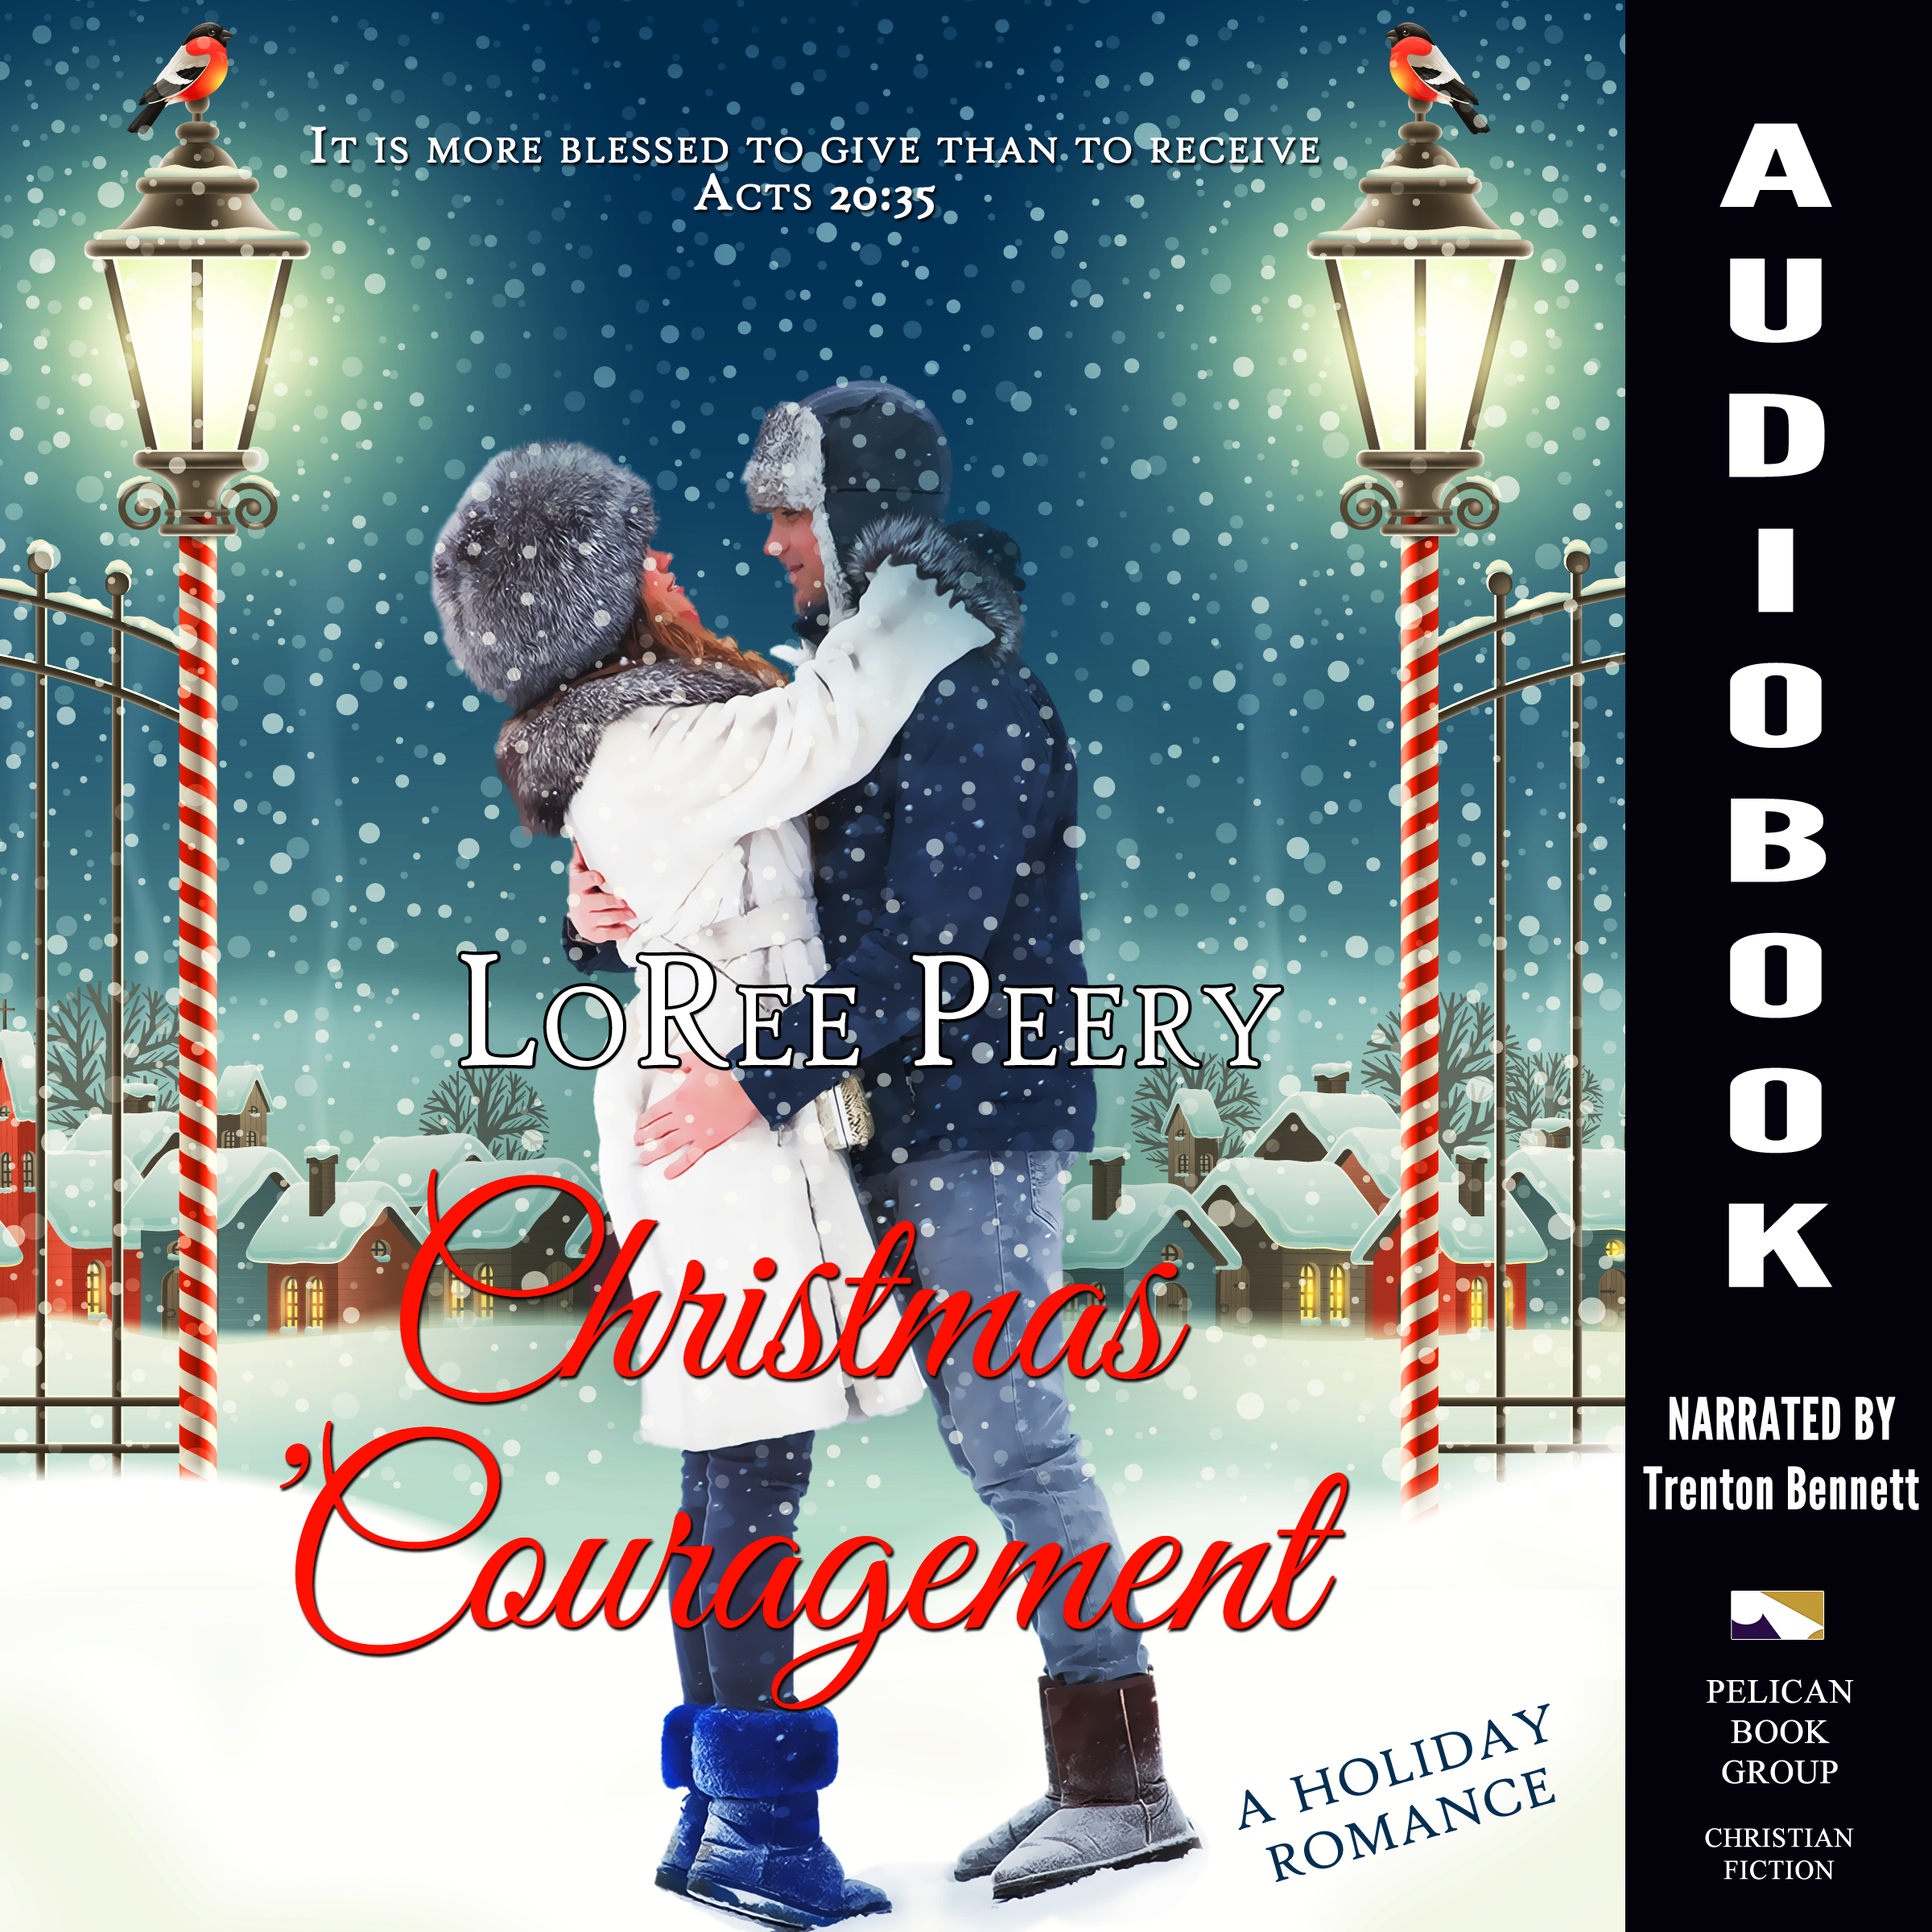 Trenton Bennett audiobook demo for Christmas 'Couragement by LoRee Peery on YouTube (video)